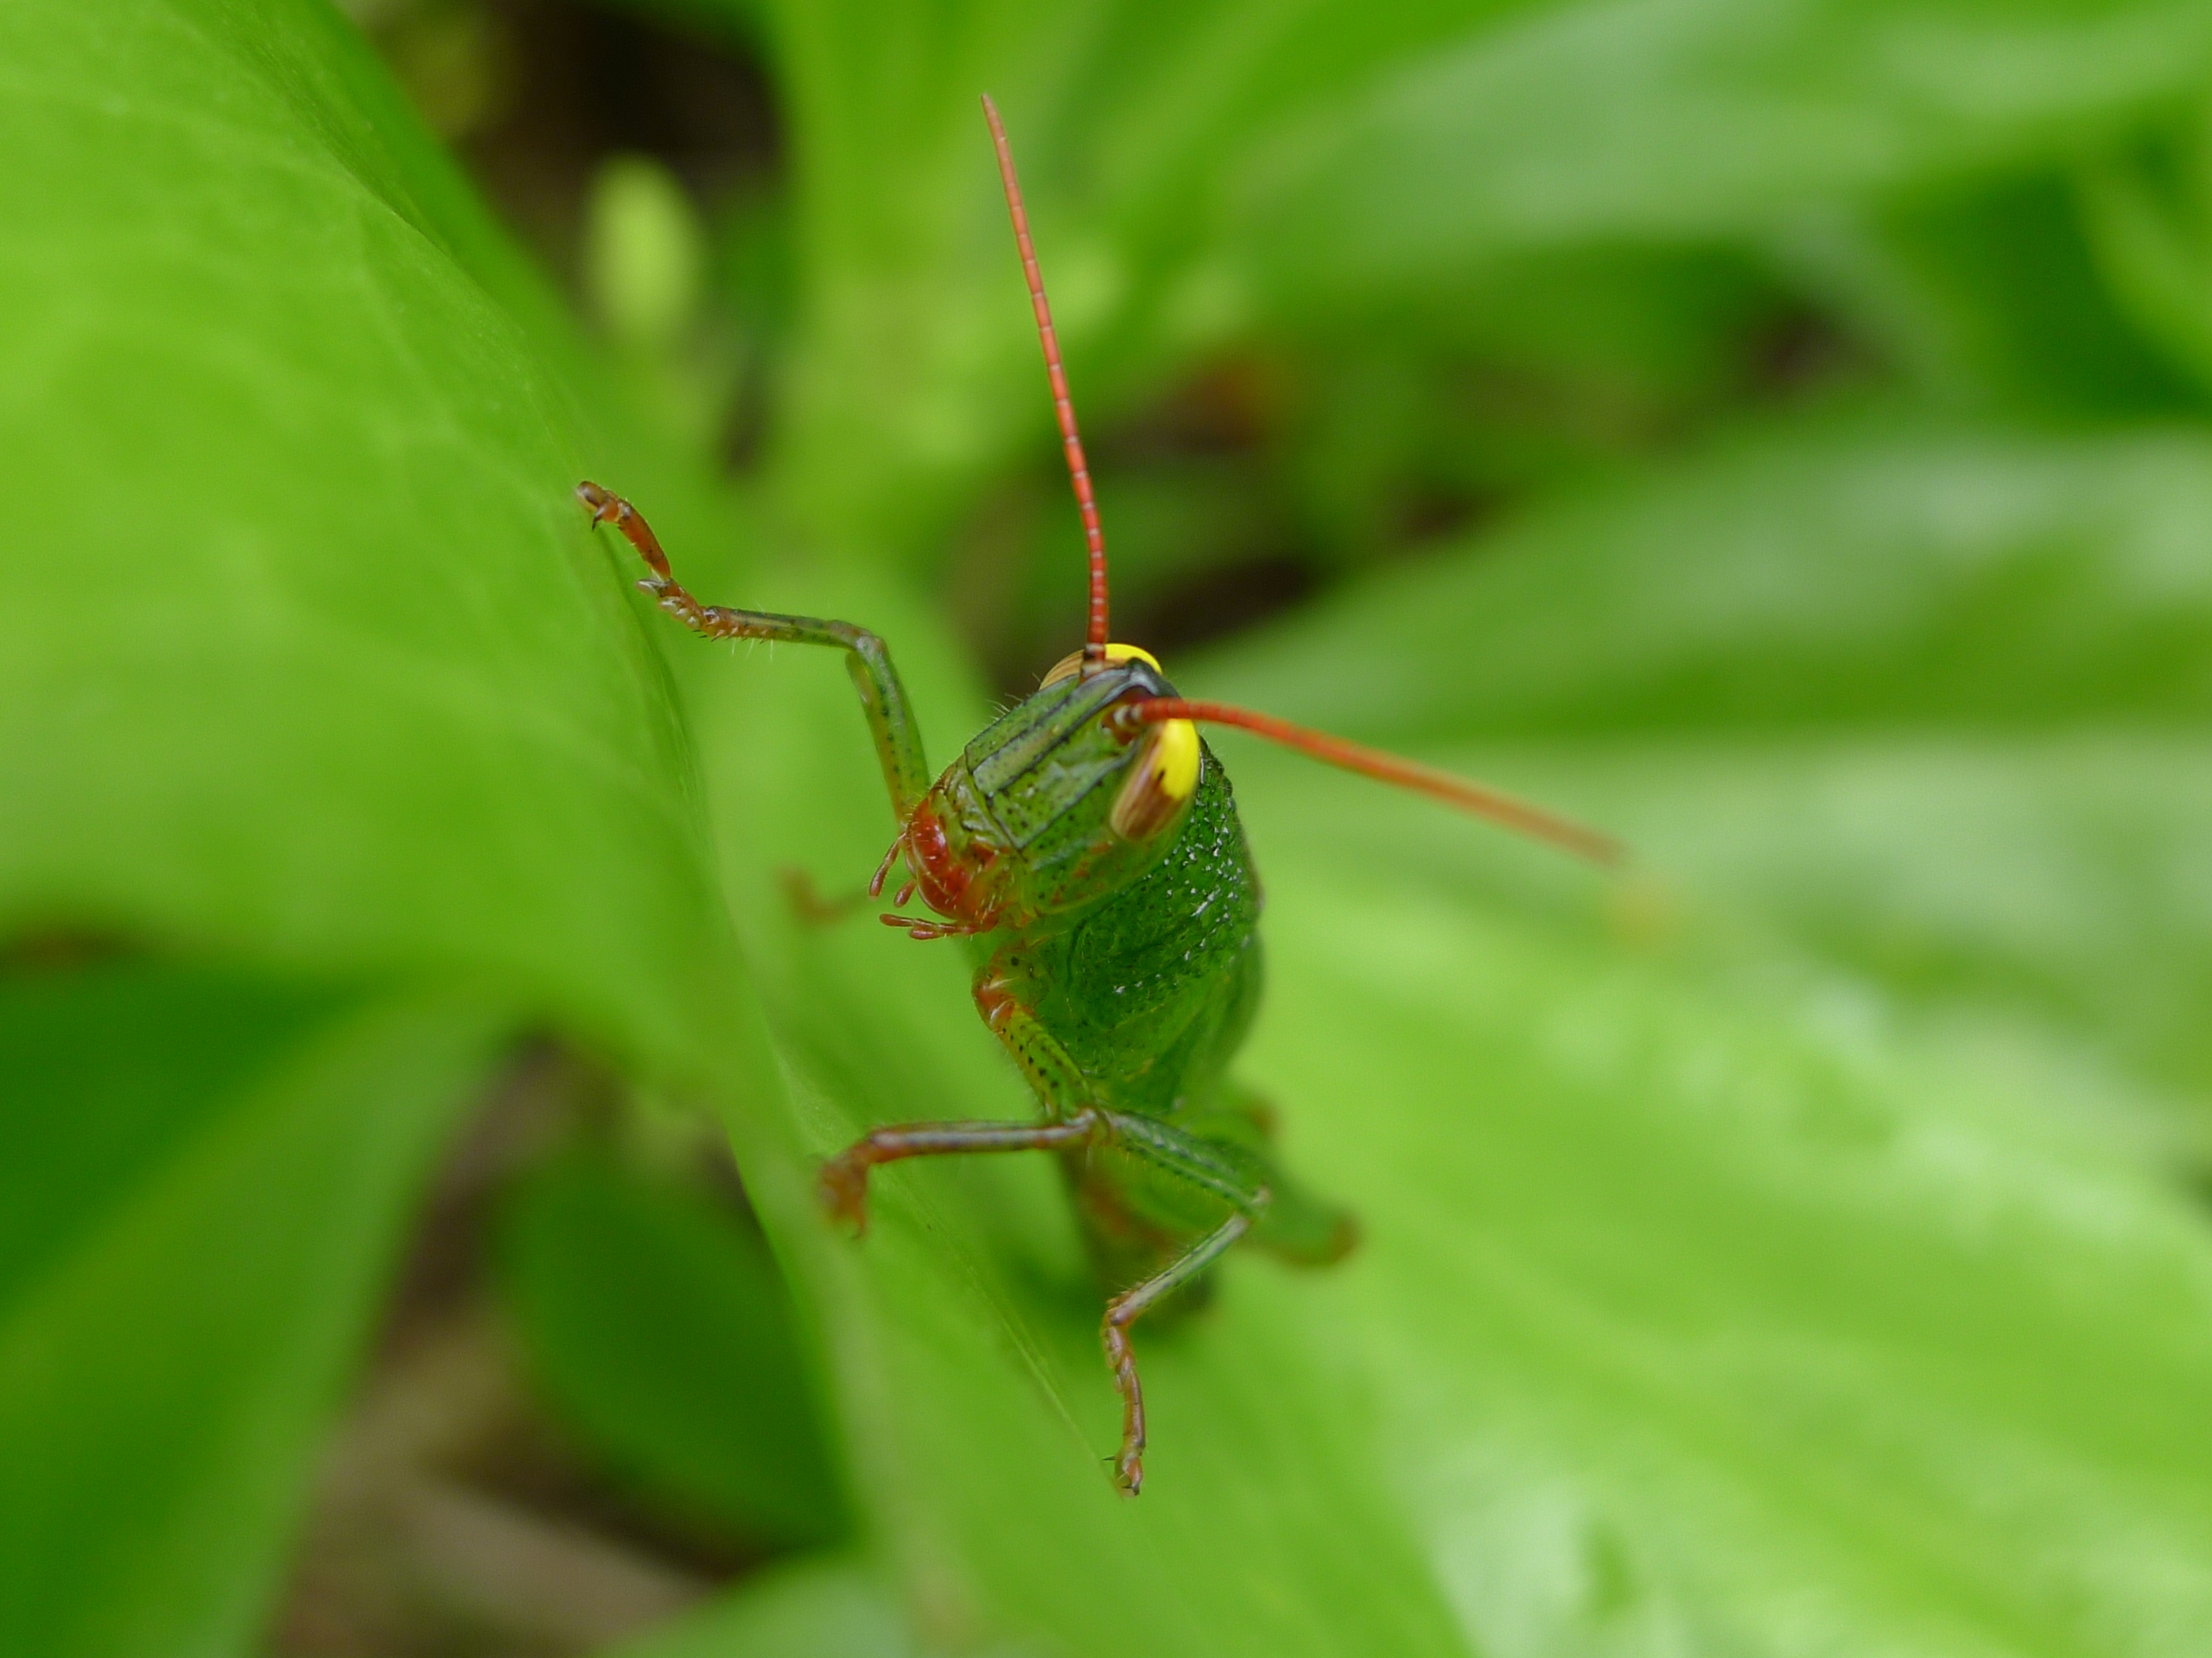 File:Green grasshopper with yellow eyes (5730632343).jpg - Wikimedia ...